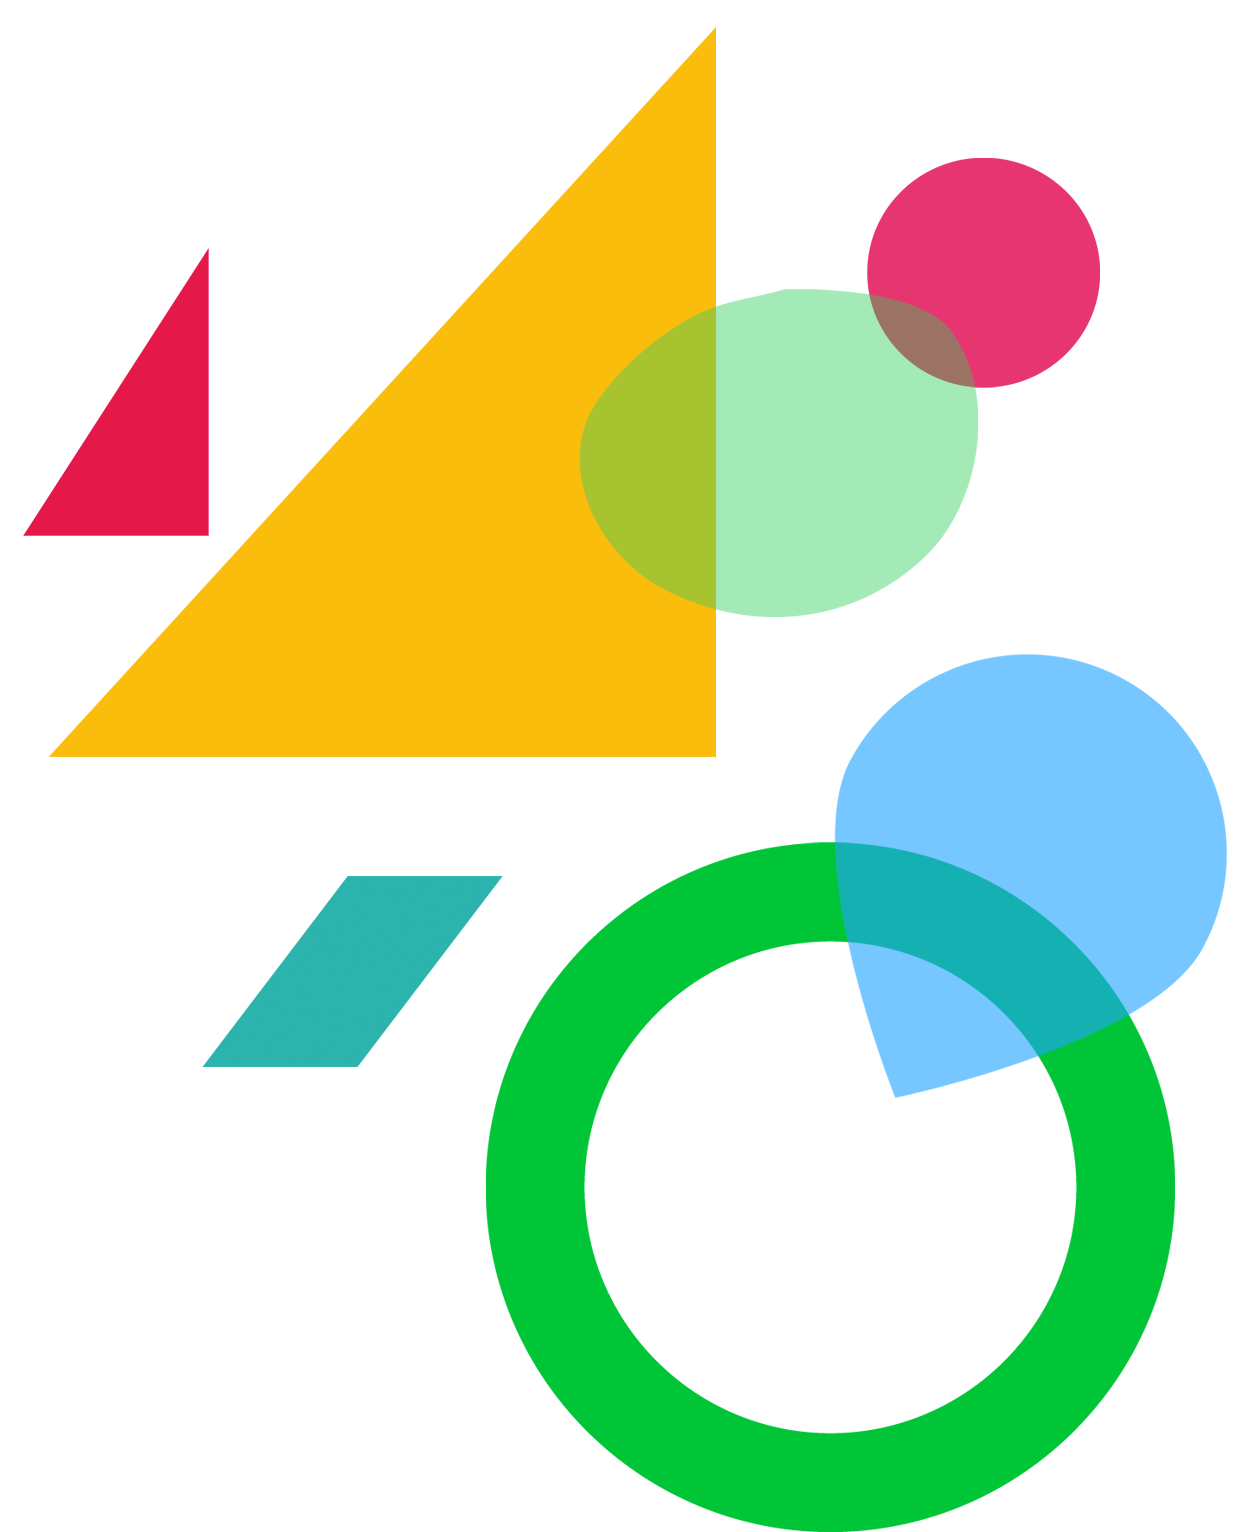 Space 48 ecommerce agency logo shapes